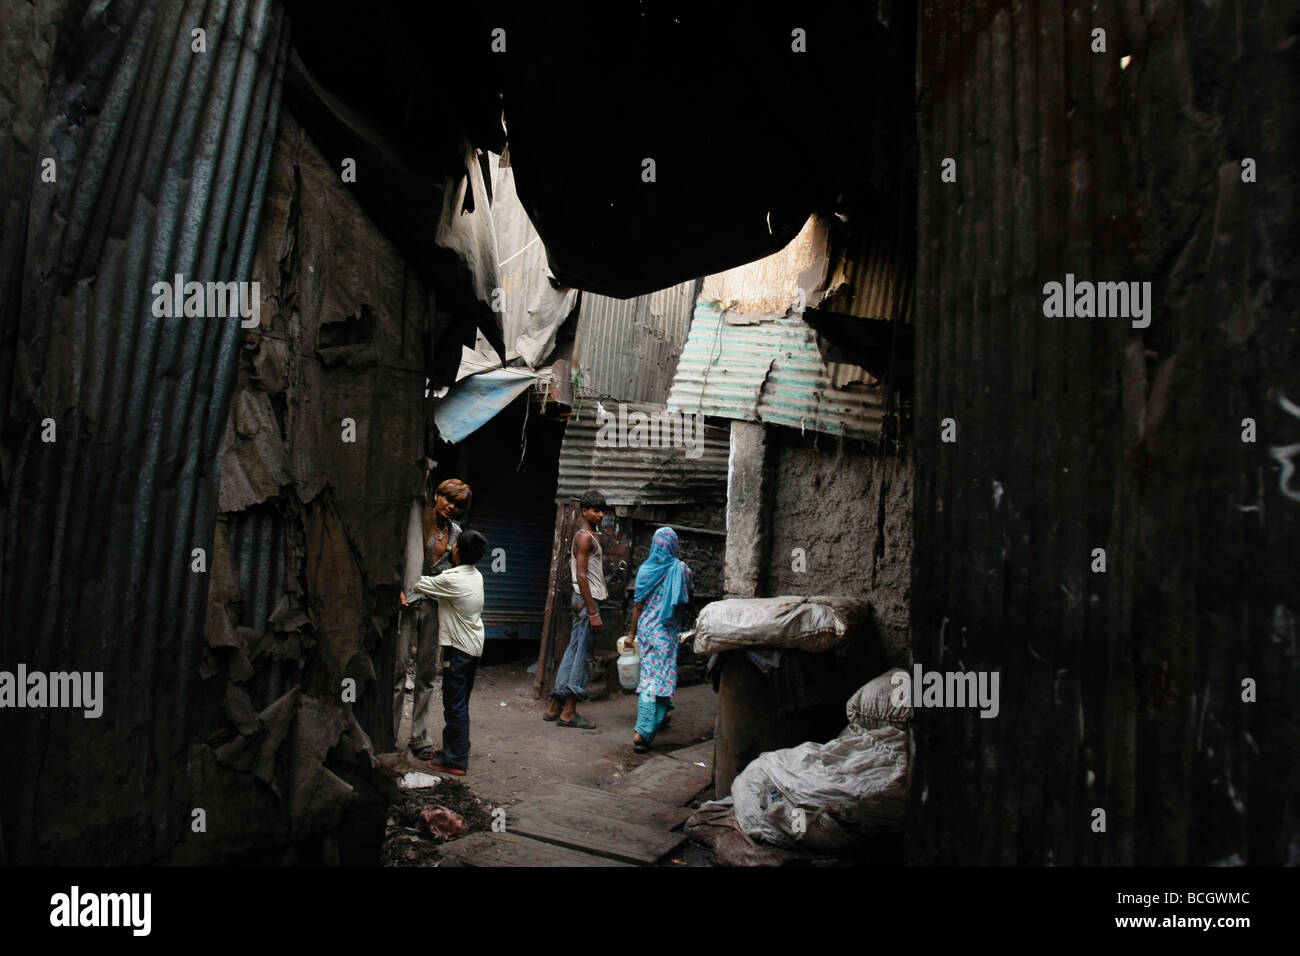 in the poor slum area of Dharavi in Mumbai (Bombay) in India. Stock Photo